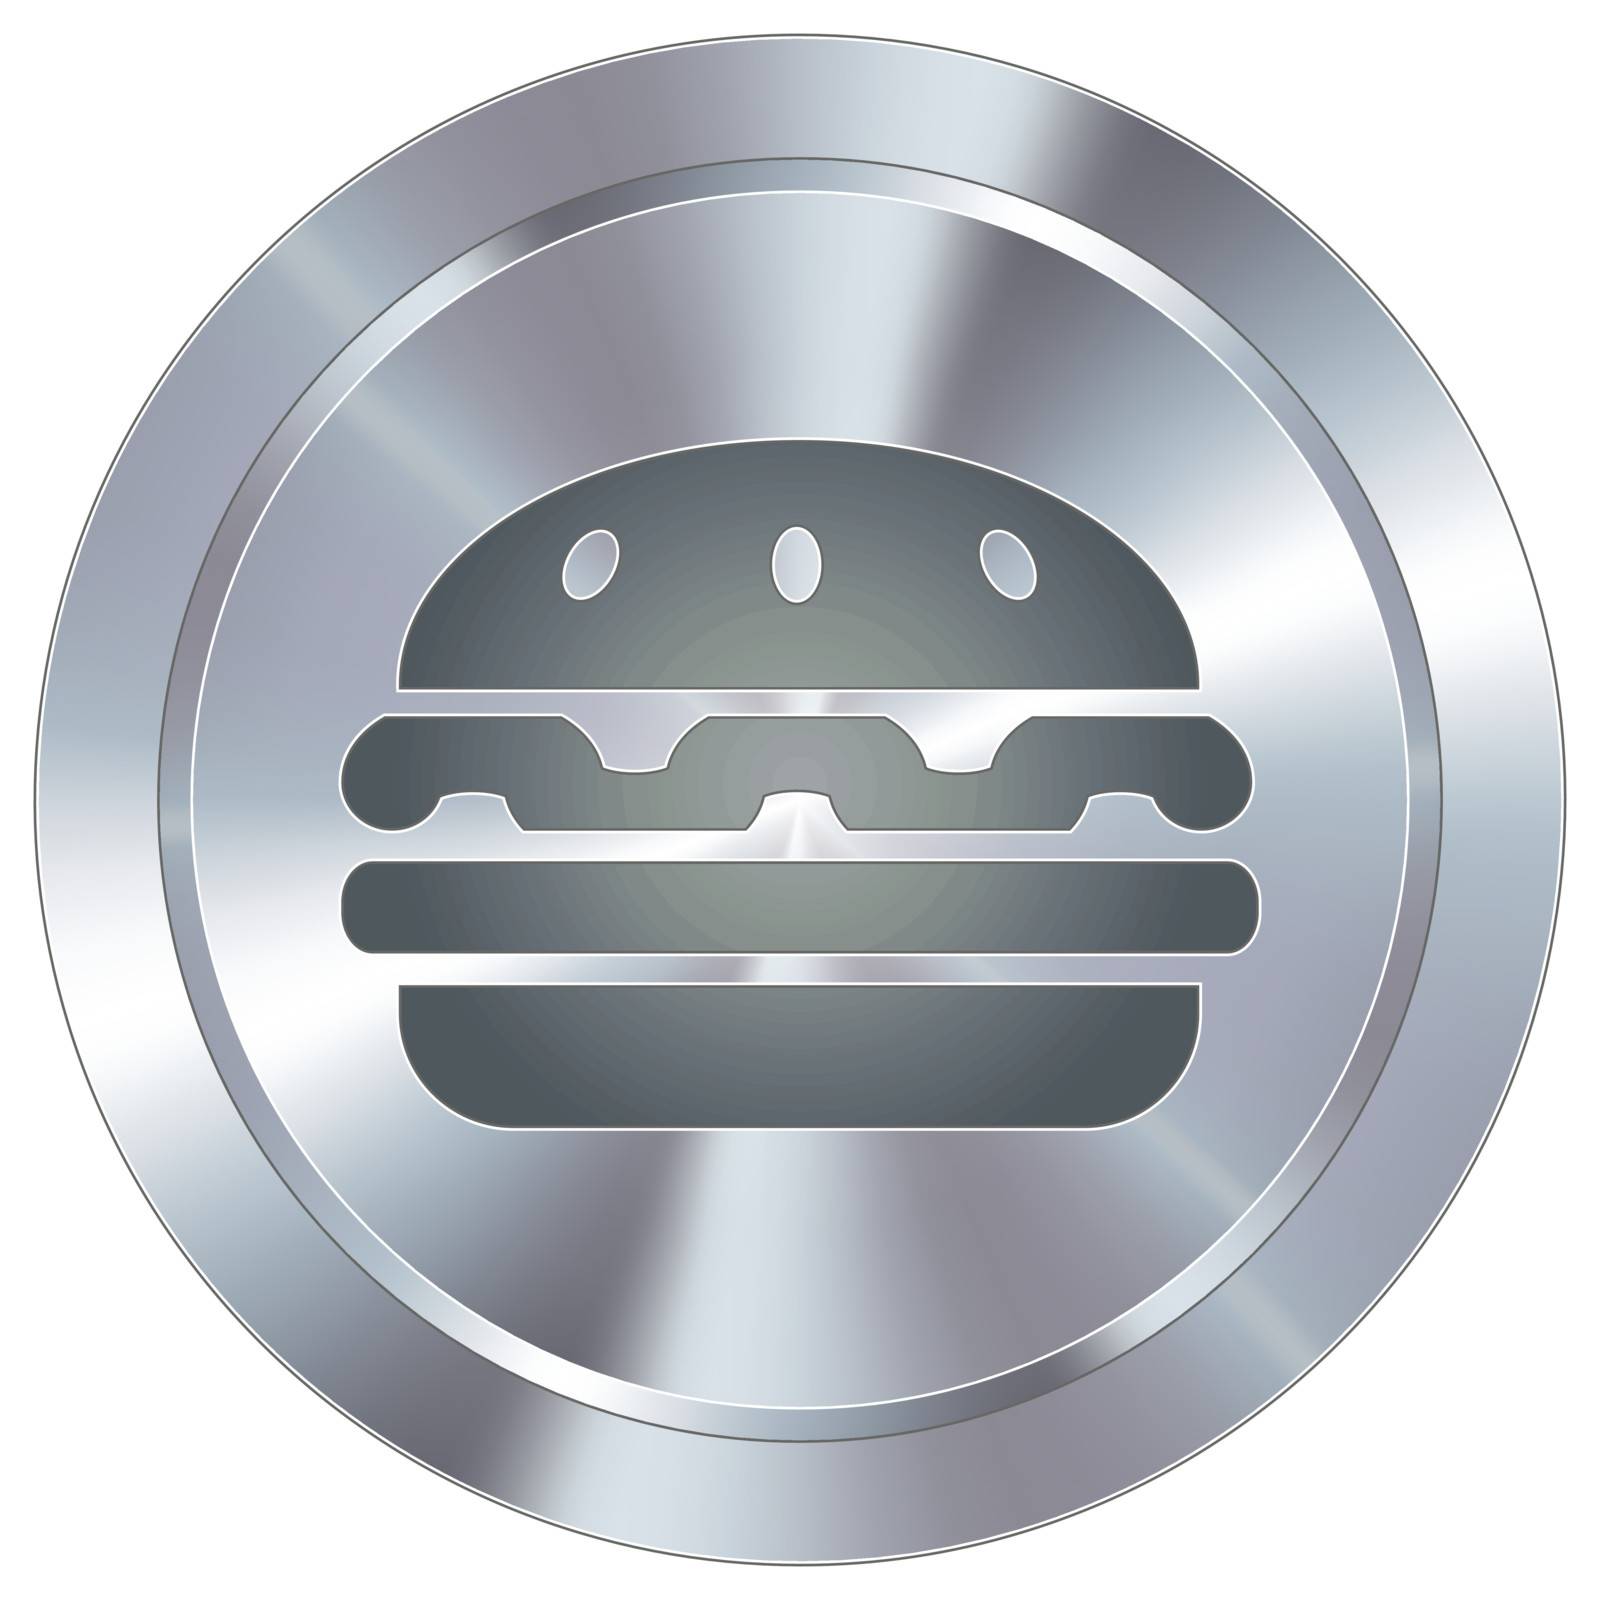 Hamburger icon on round stainless steel modern industrial button